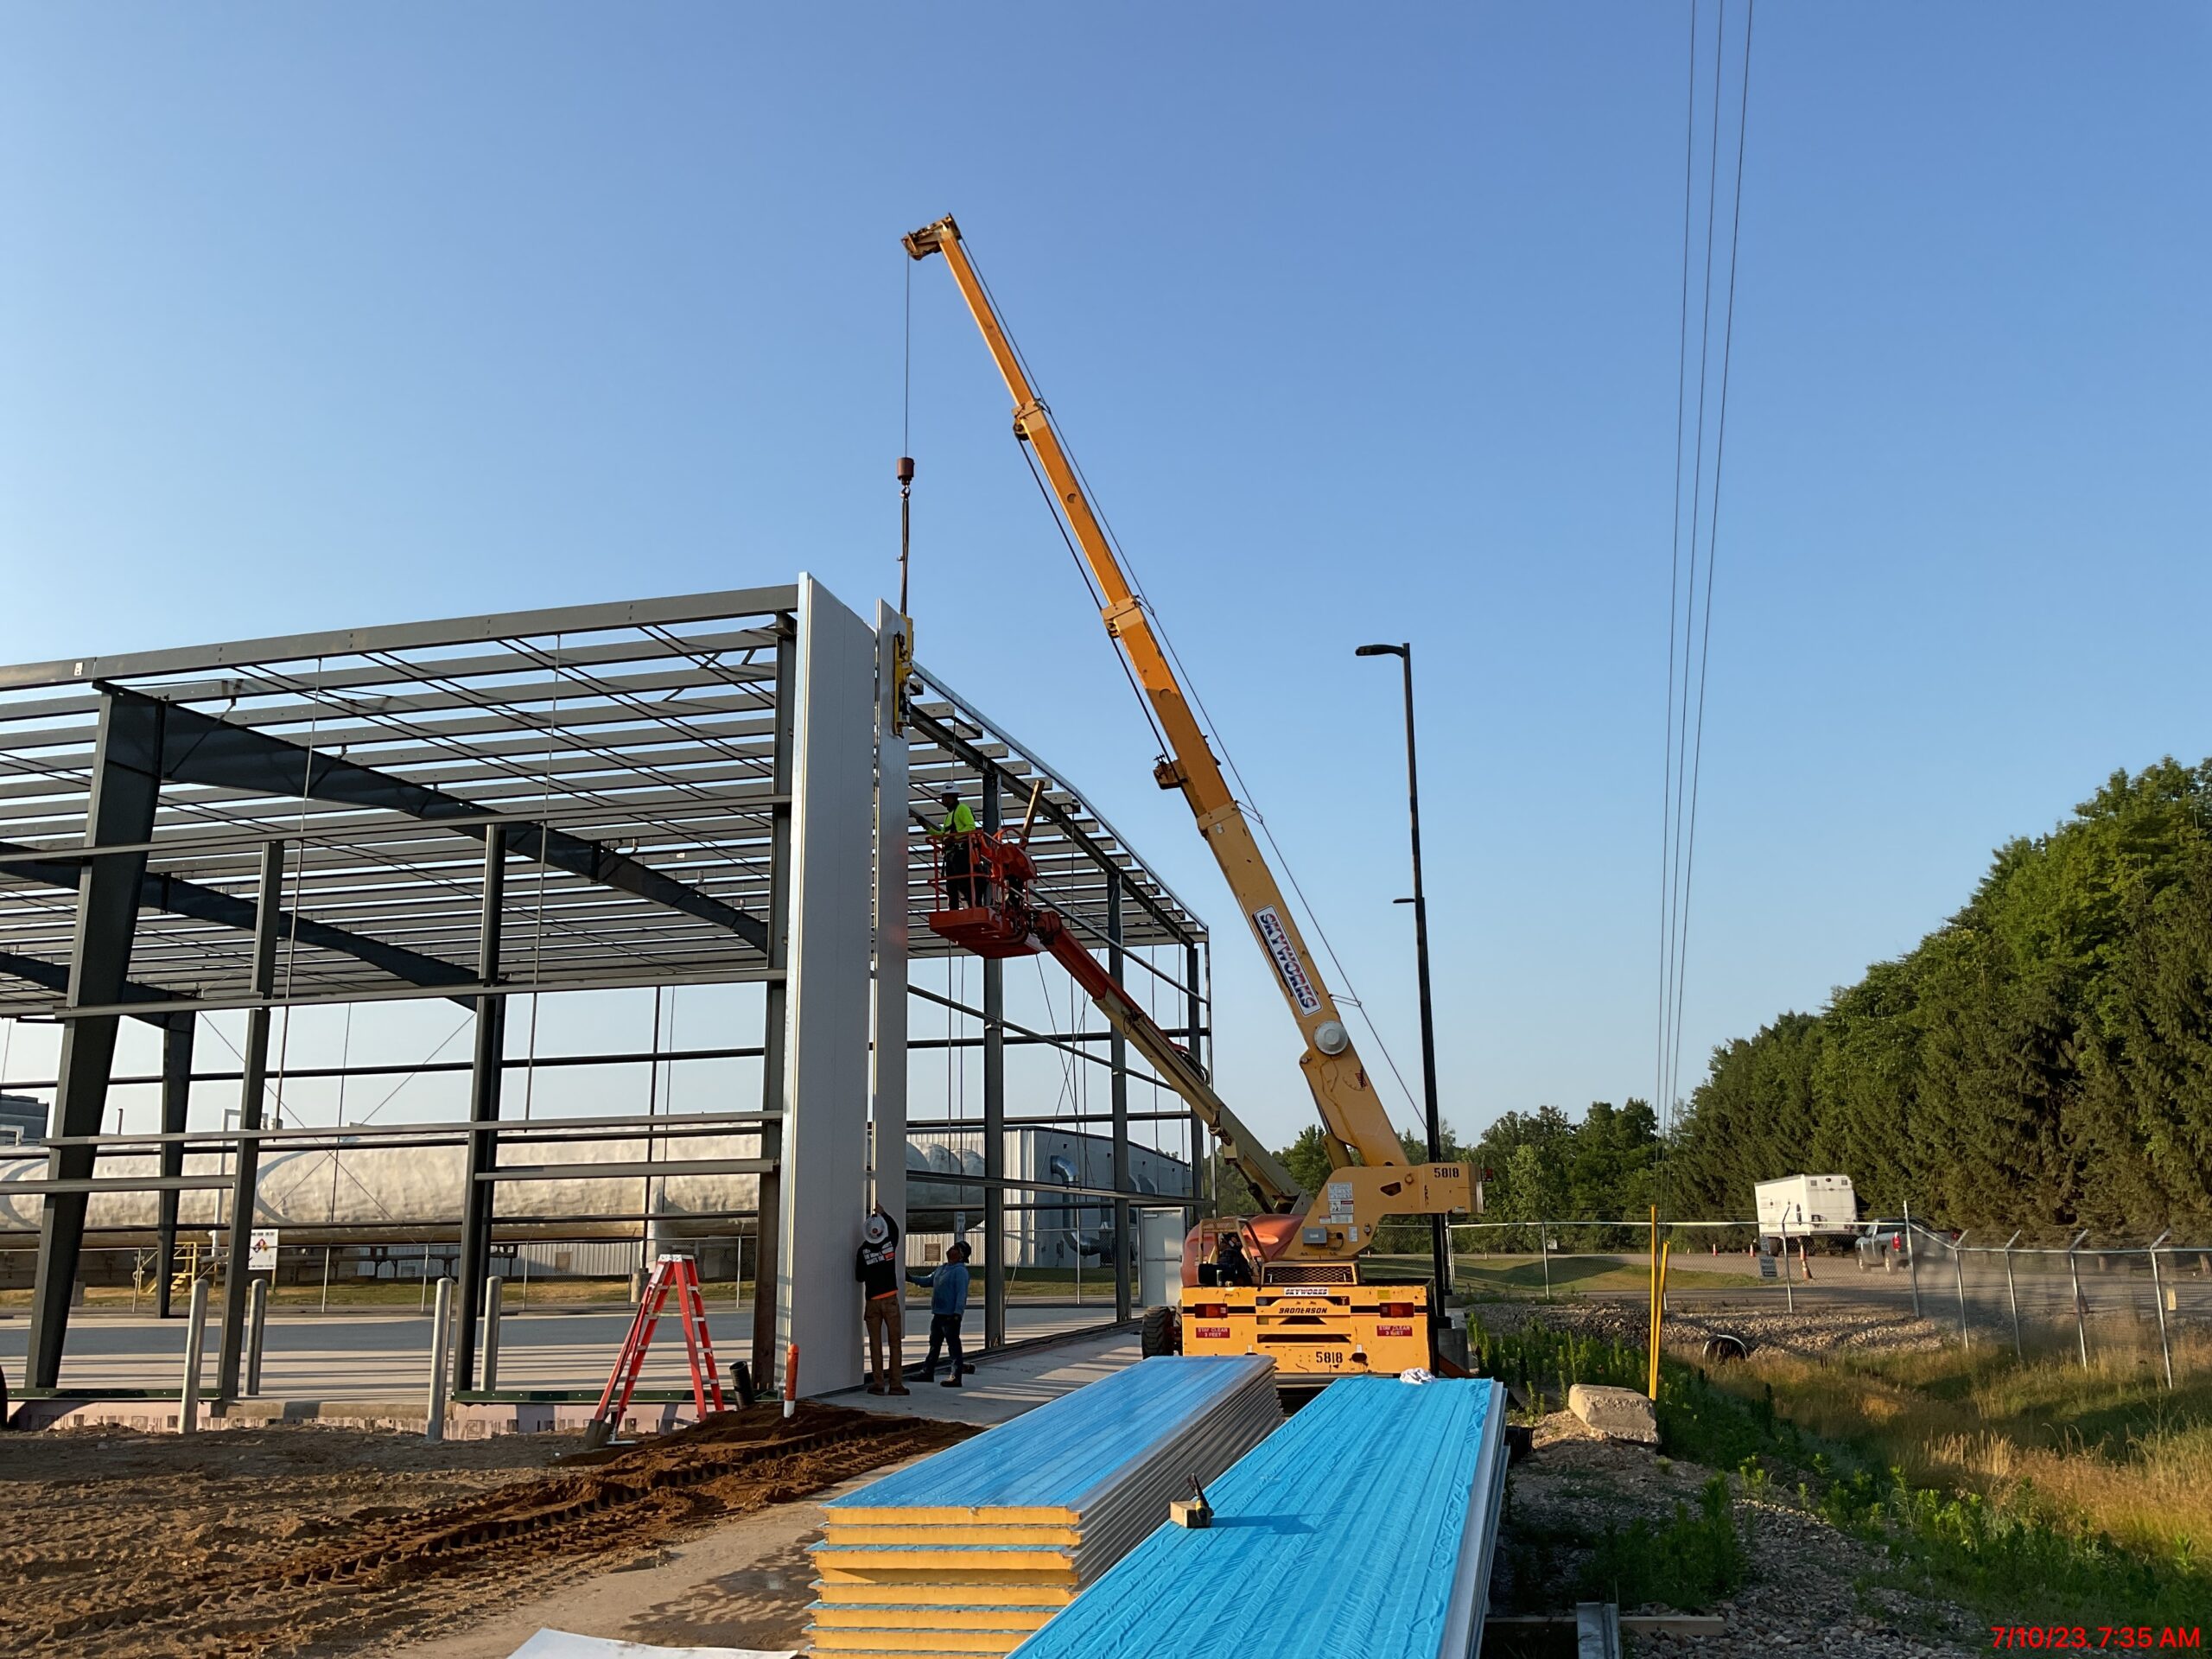 Concrete crew setting metal siding on building frame